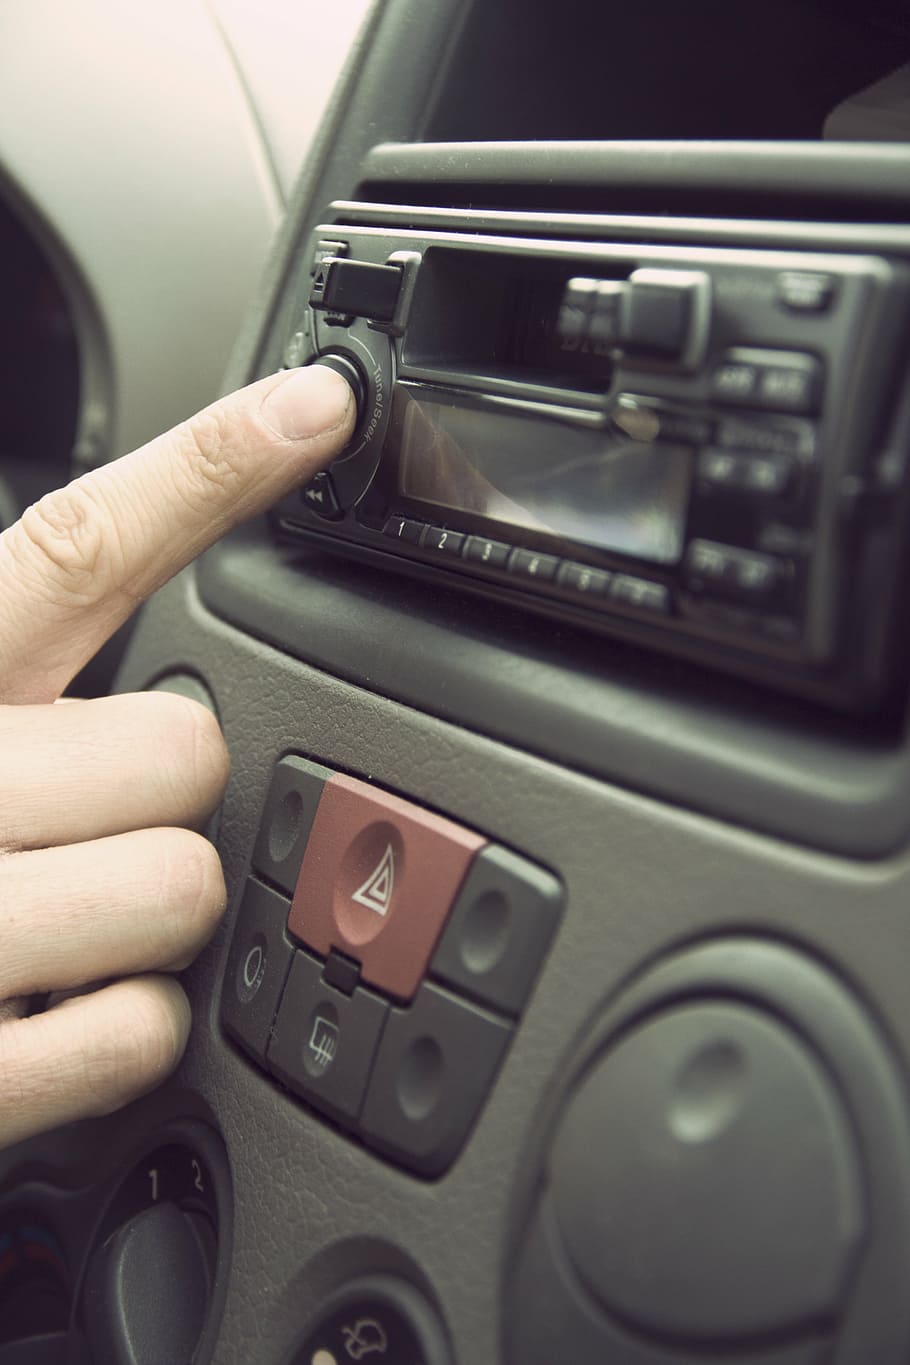 audio, car, controls, distraction, music, radio, technology